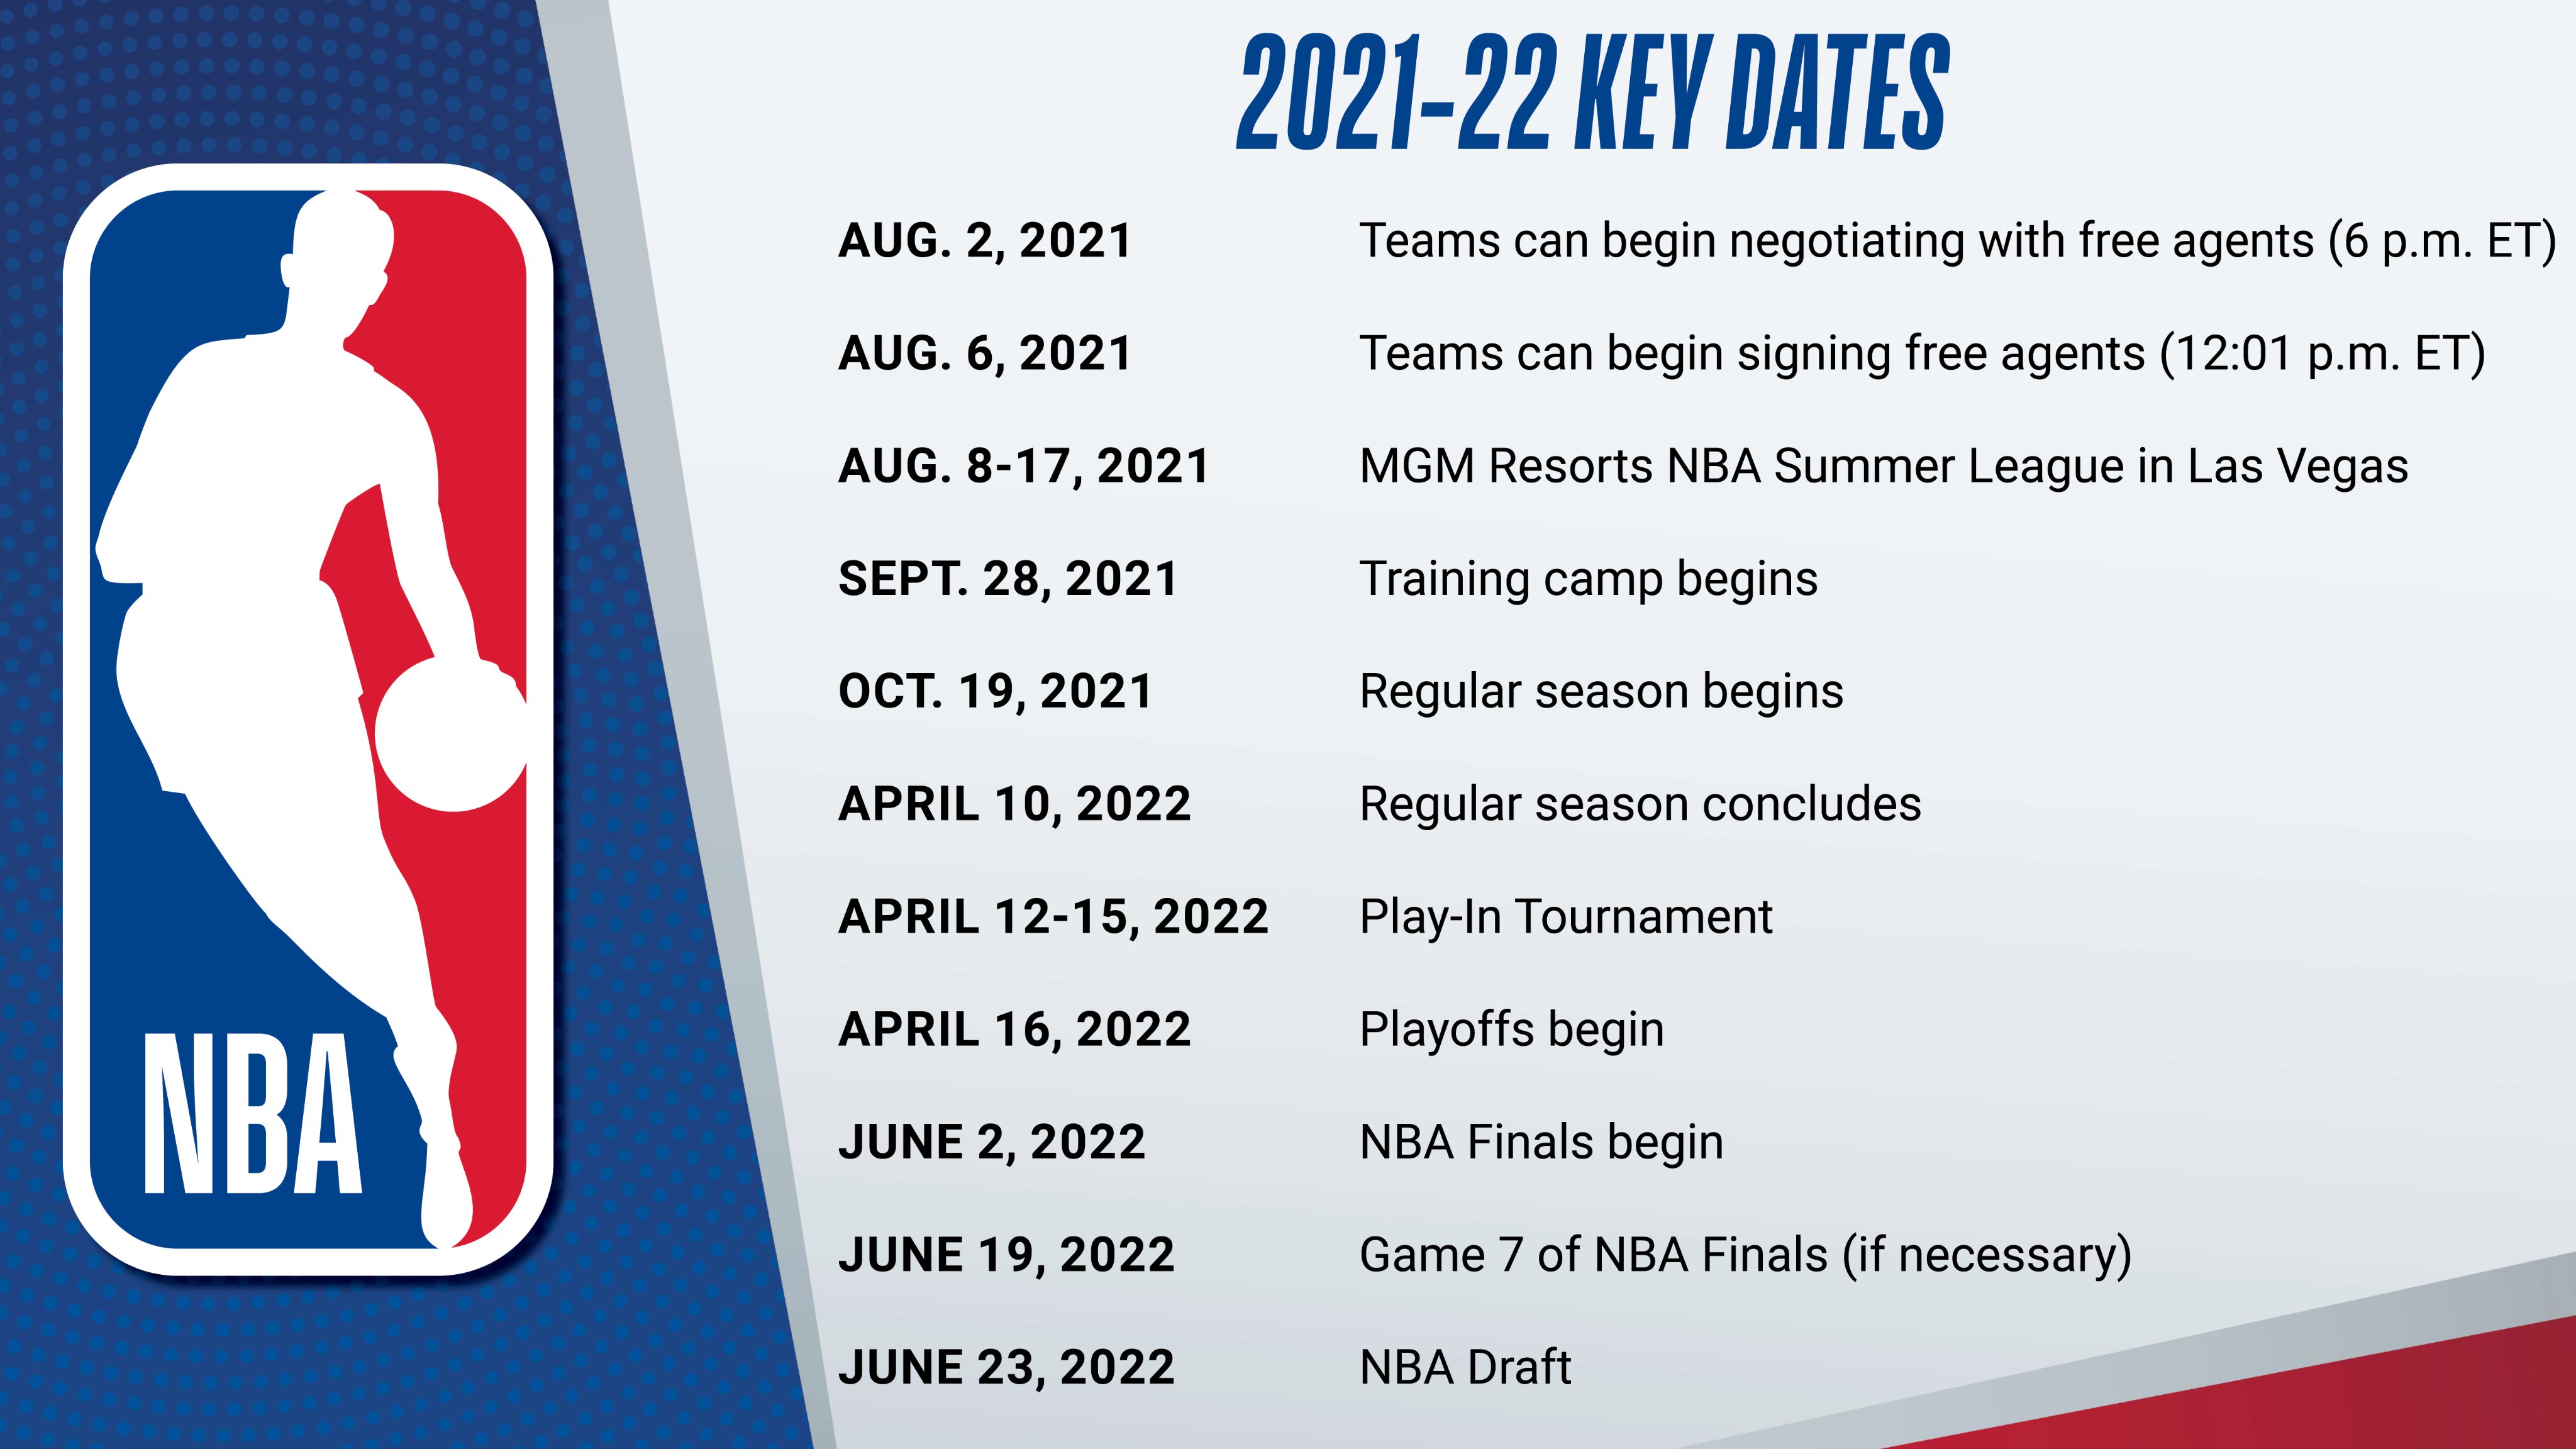 Nba Playoffs 2022 Schedule Dates Nba Communications On Twitter: "Key Dates For The 2021-22 Nba Season ⬇️  Https://T.co/Nbwcivrhzh" / Twitter